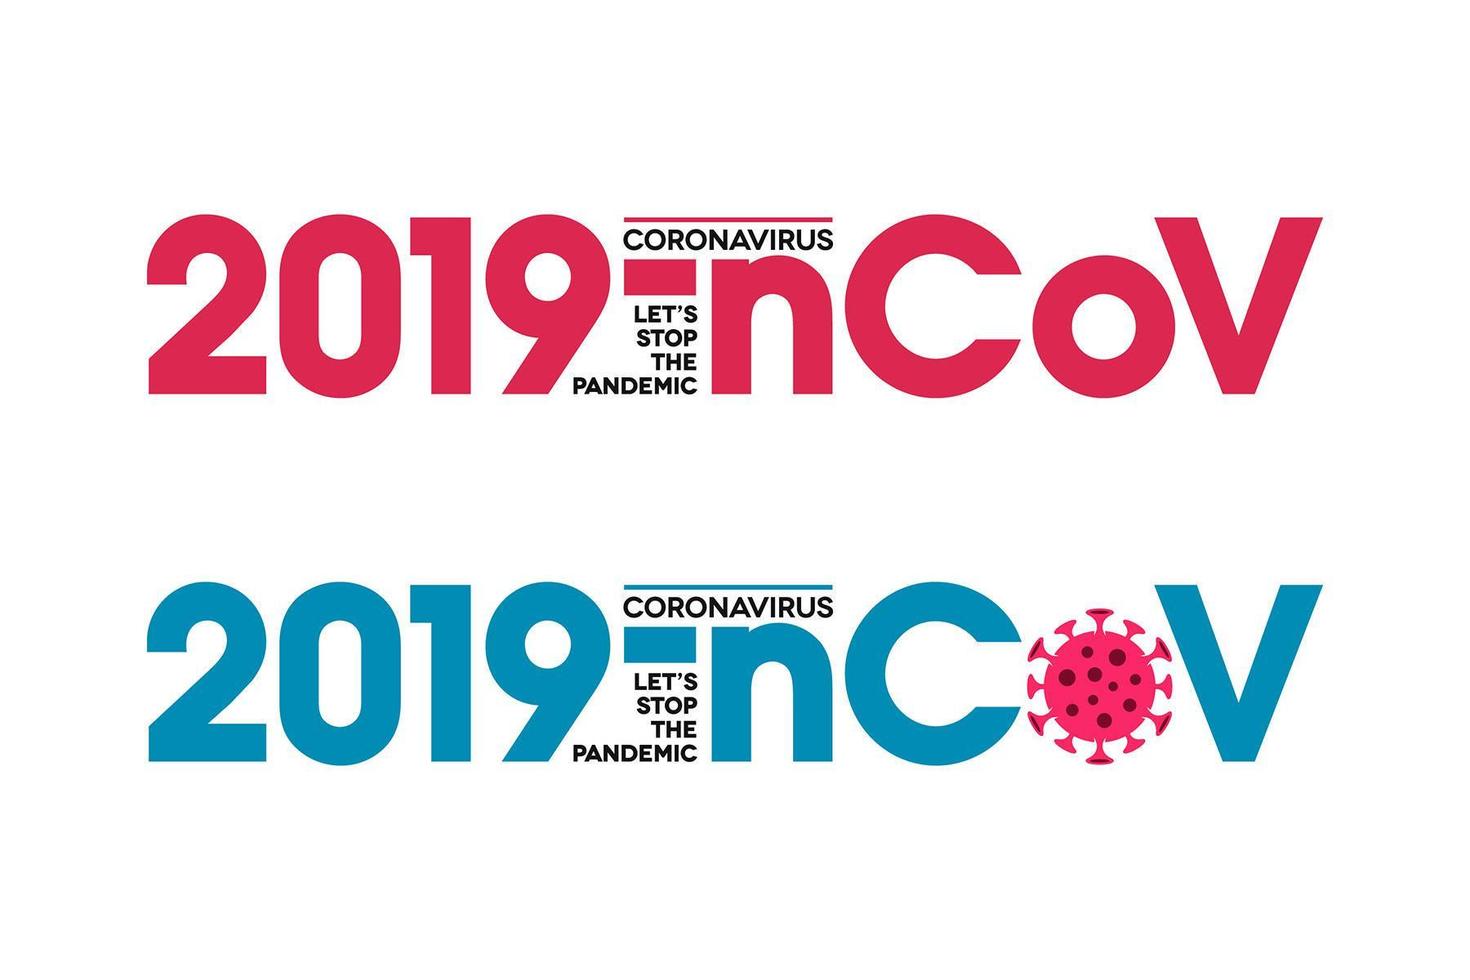 2019-ncov lettrage typographique icône du coronavirus vecteur